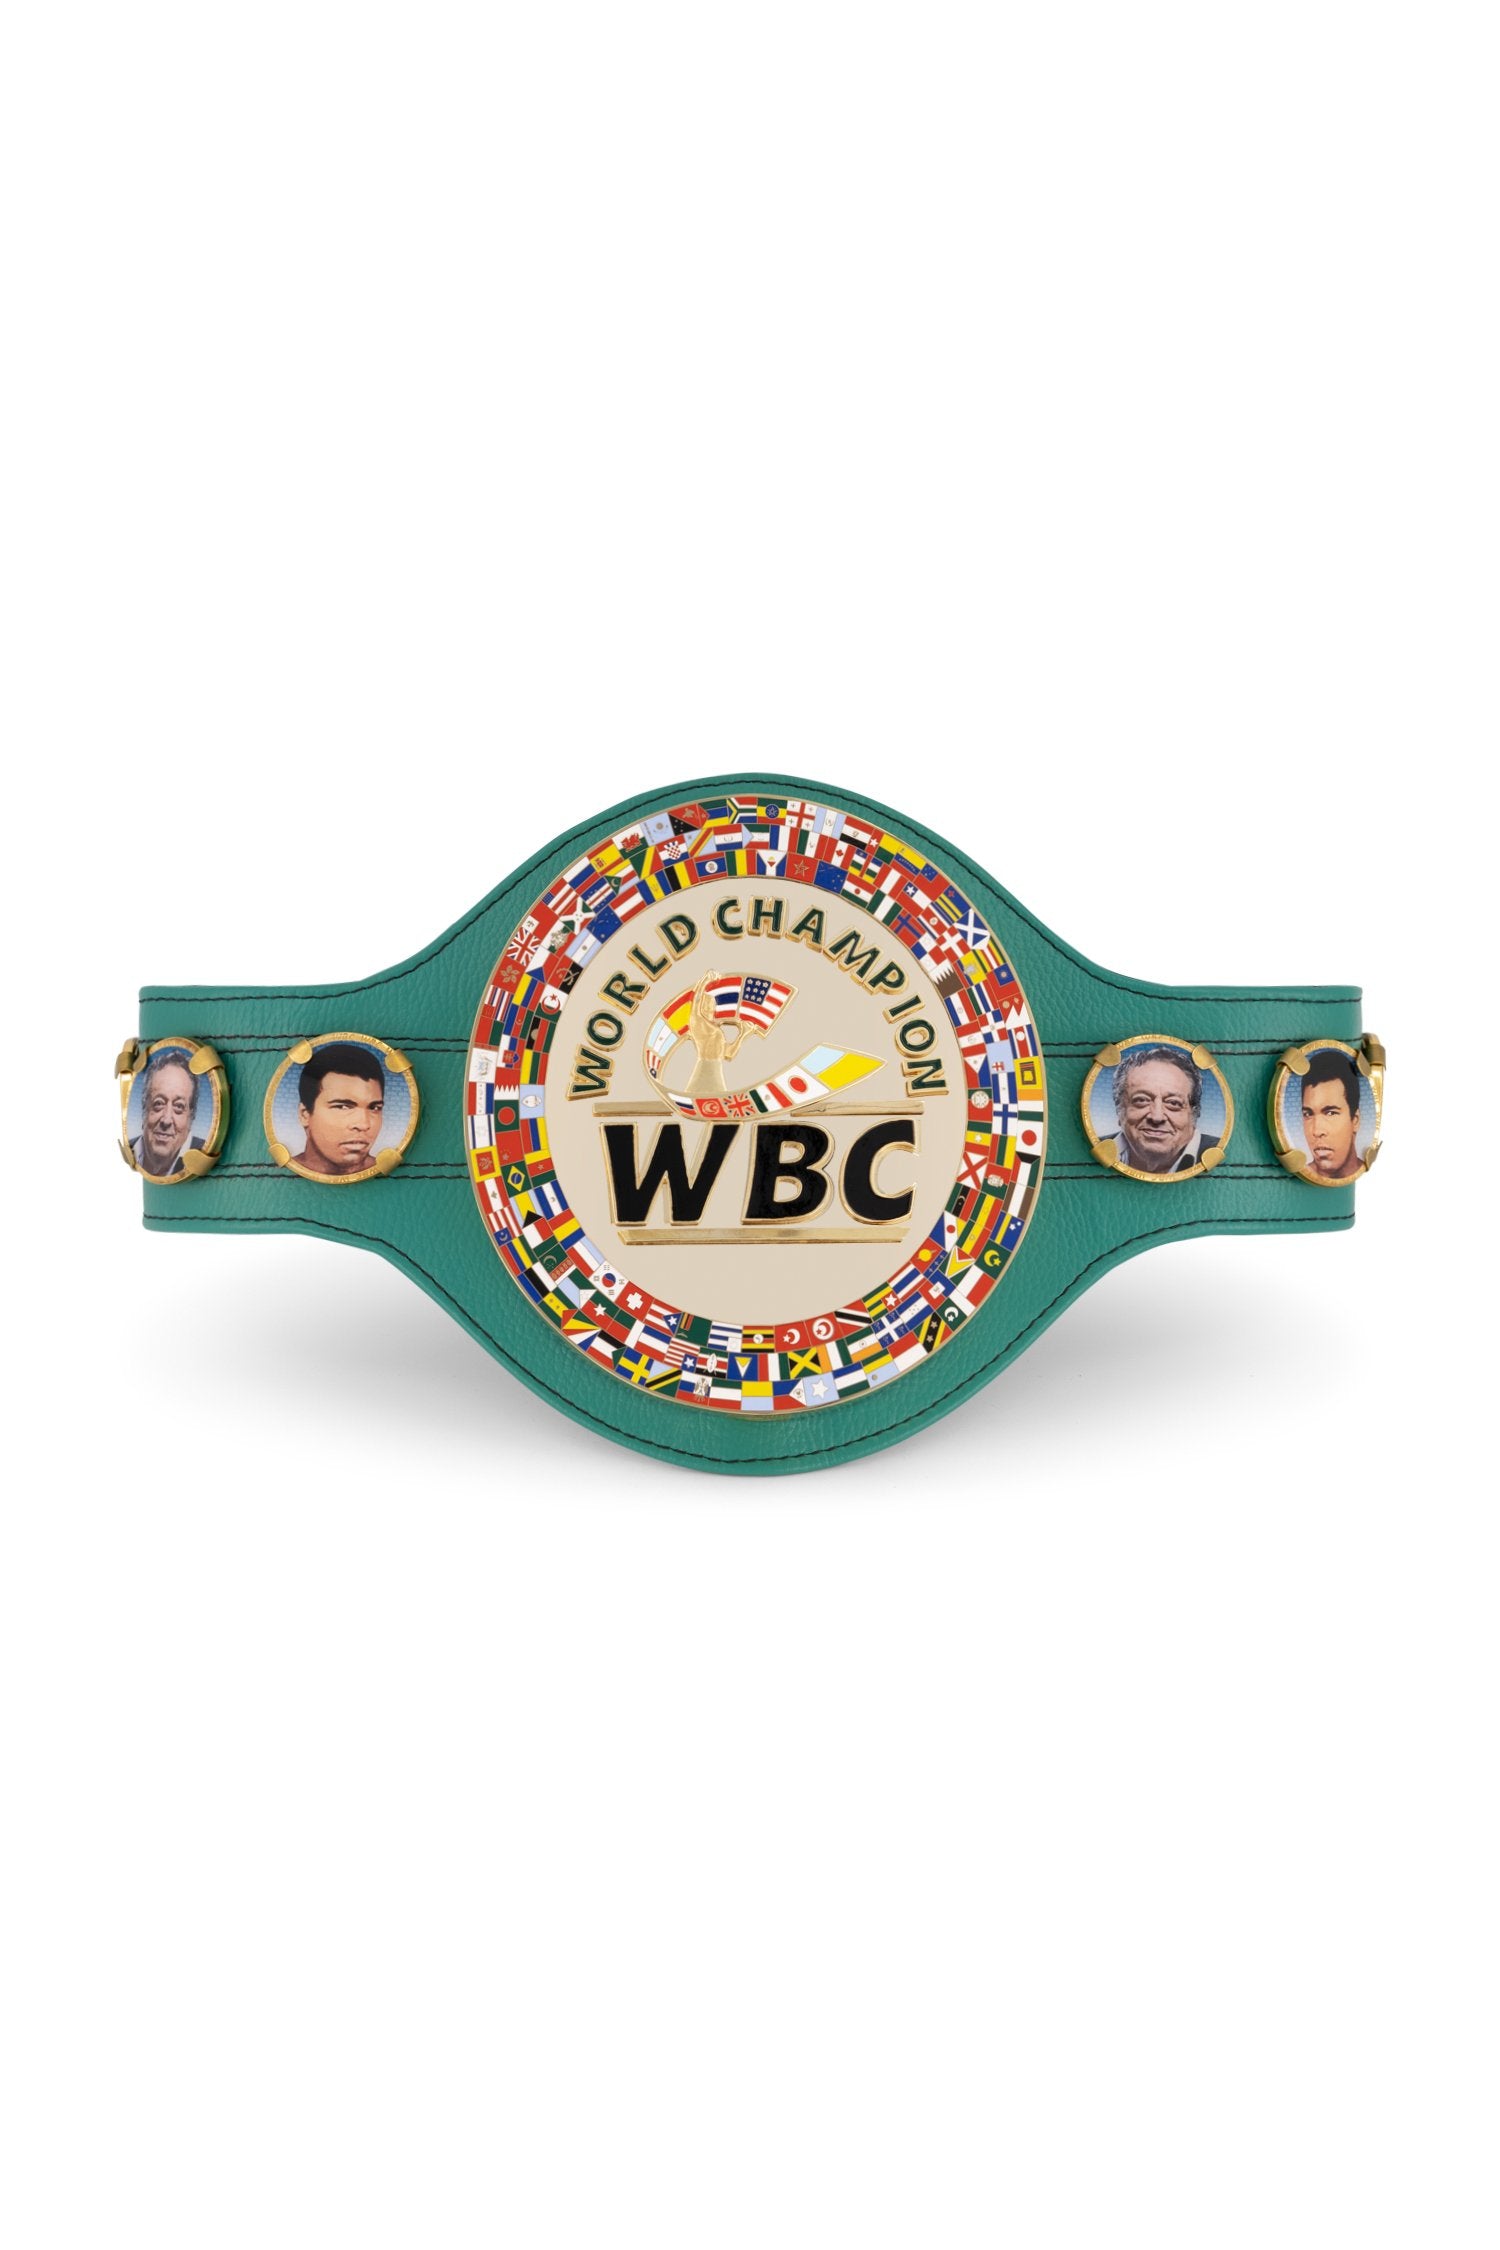 WBCアワード世界チャンピオンベルト②ジョールイス